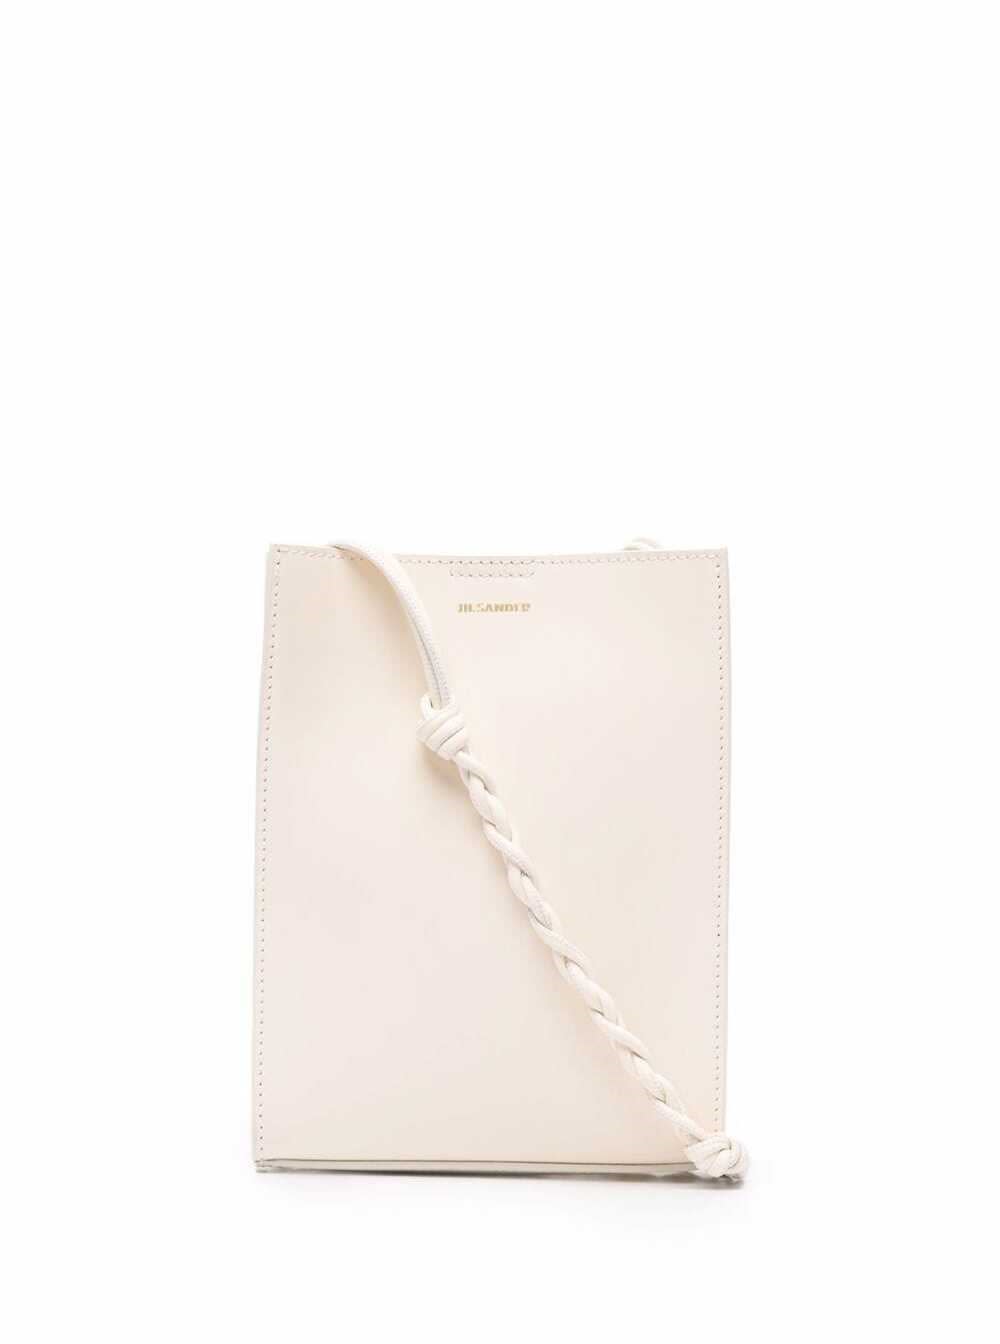 Jil Sander Tangle Sm Crossbody Bag In White Leather